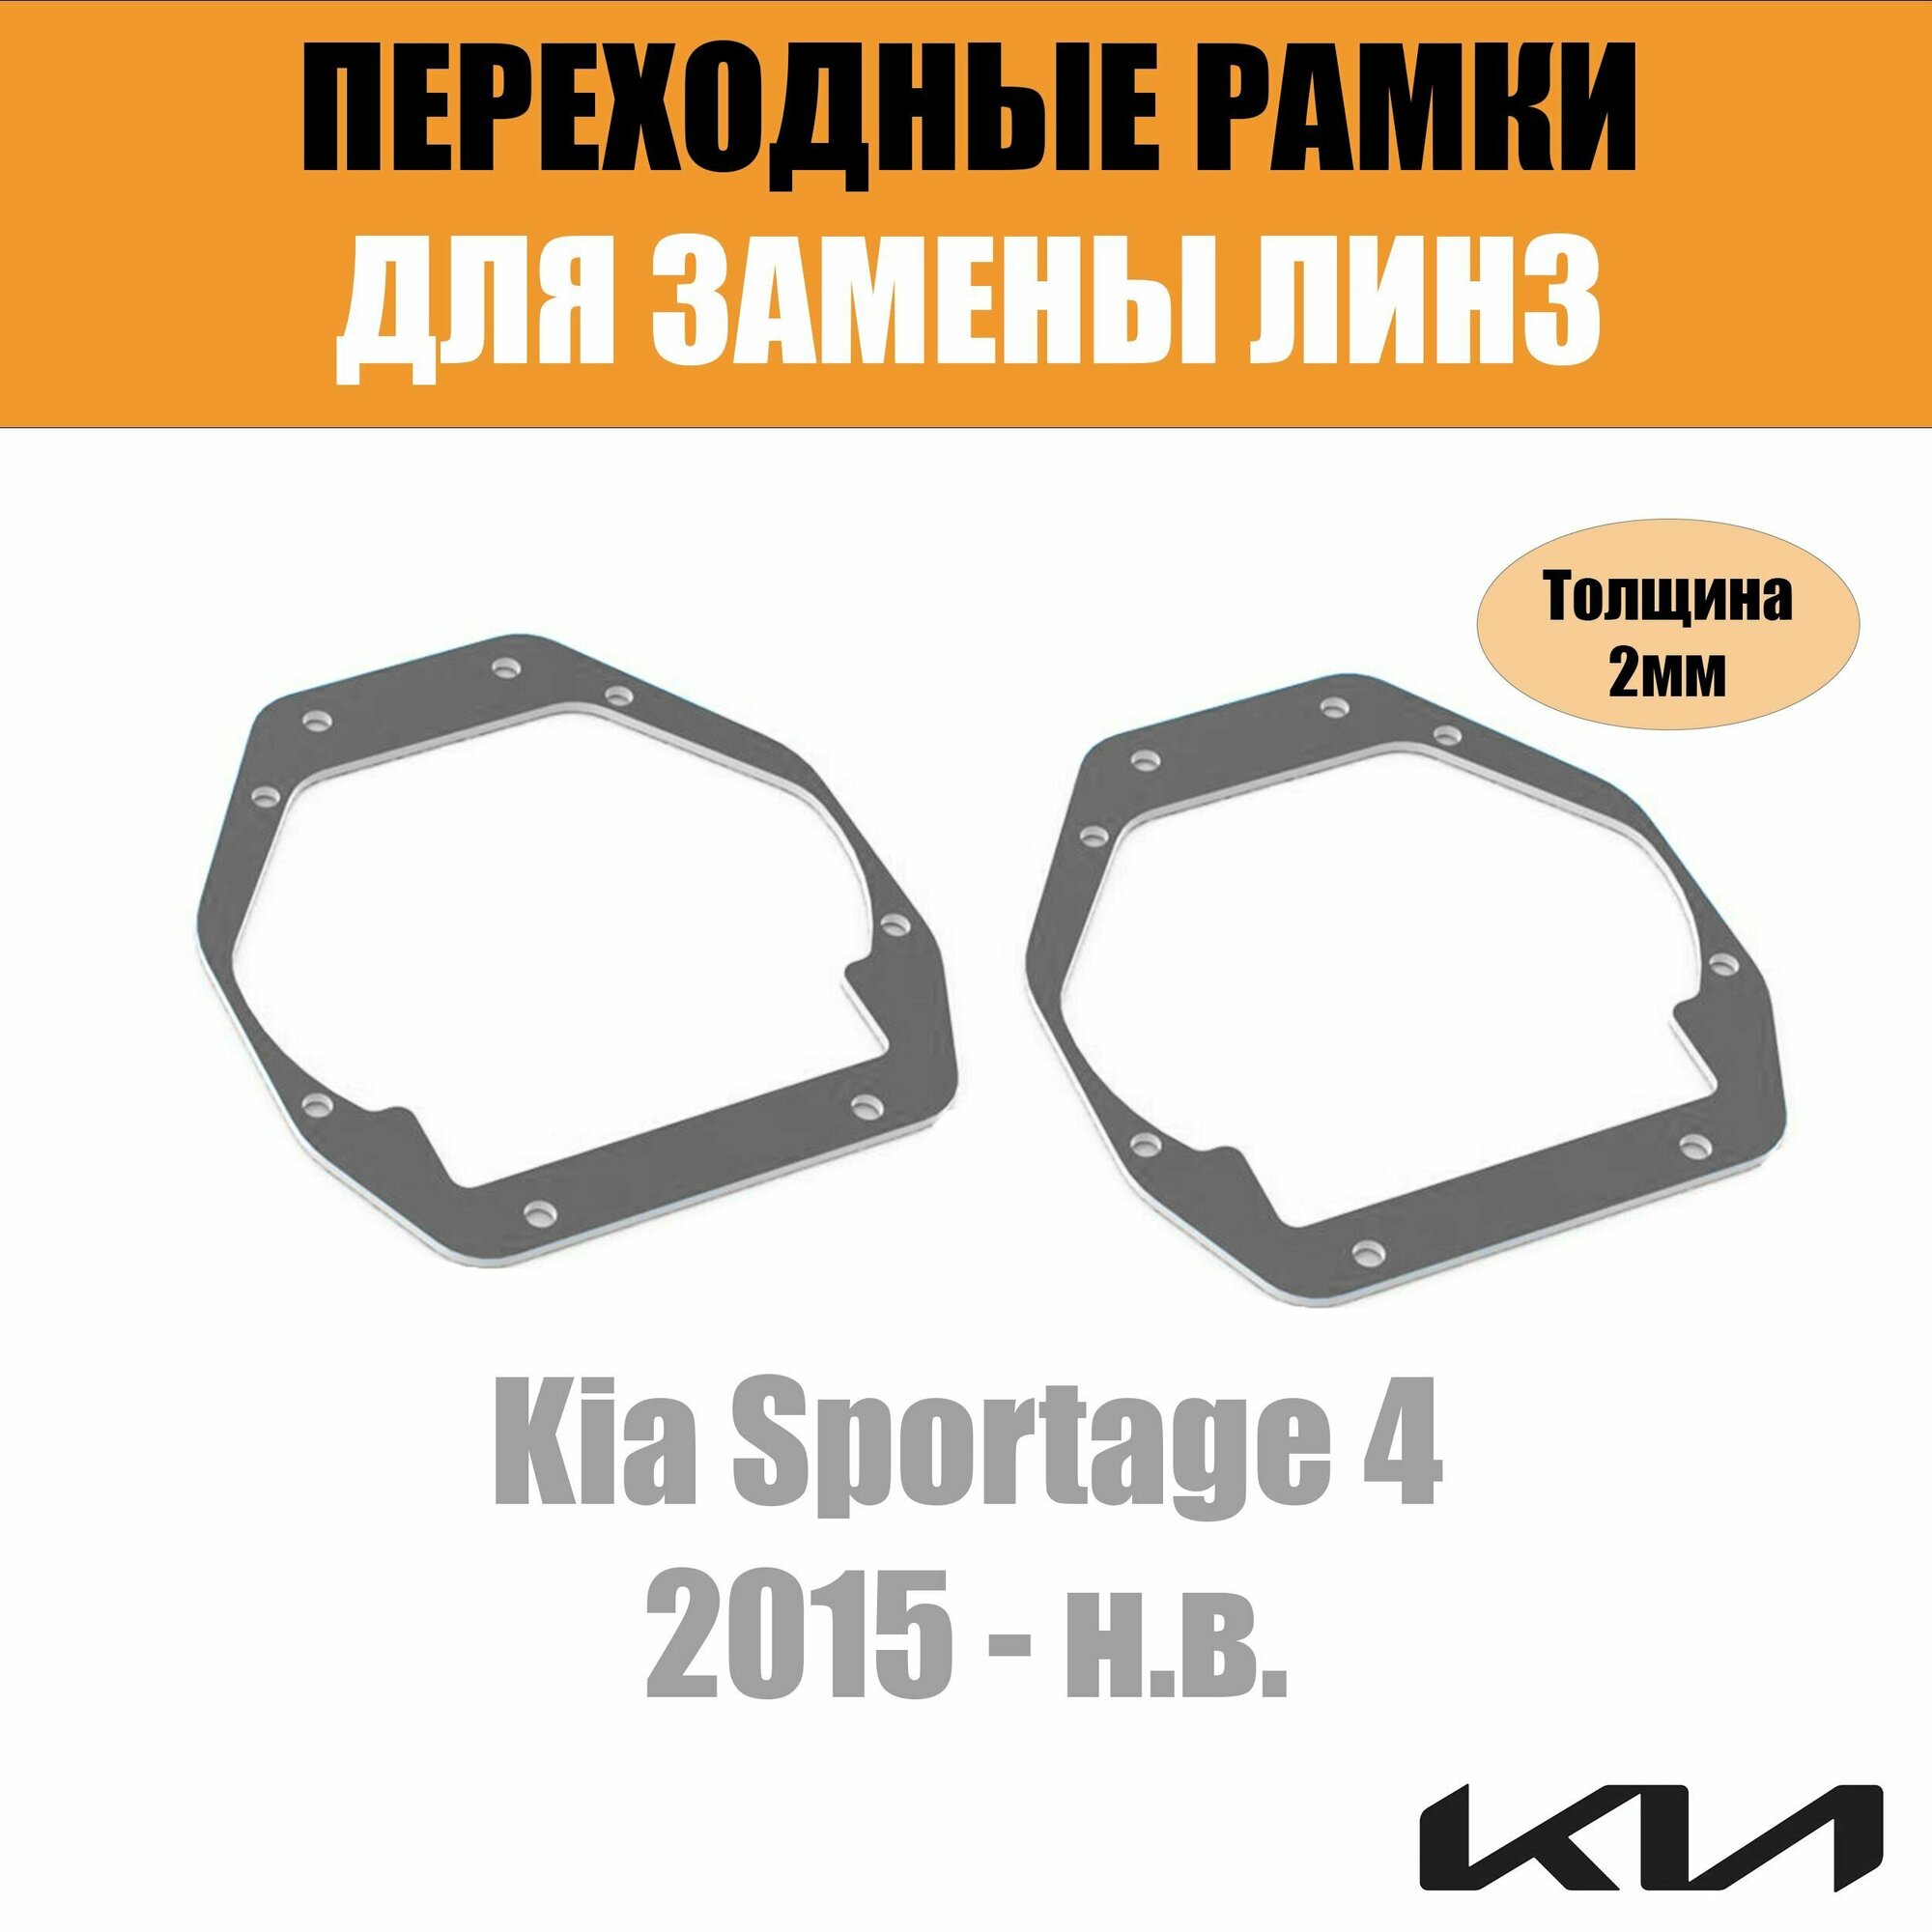 Переходные рамки для Kia Sportage 4 (2015 - н. в.) под модуль Hella 3R/Hella 3 (Комплект 2шт)